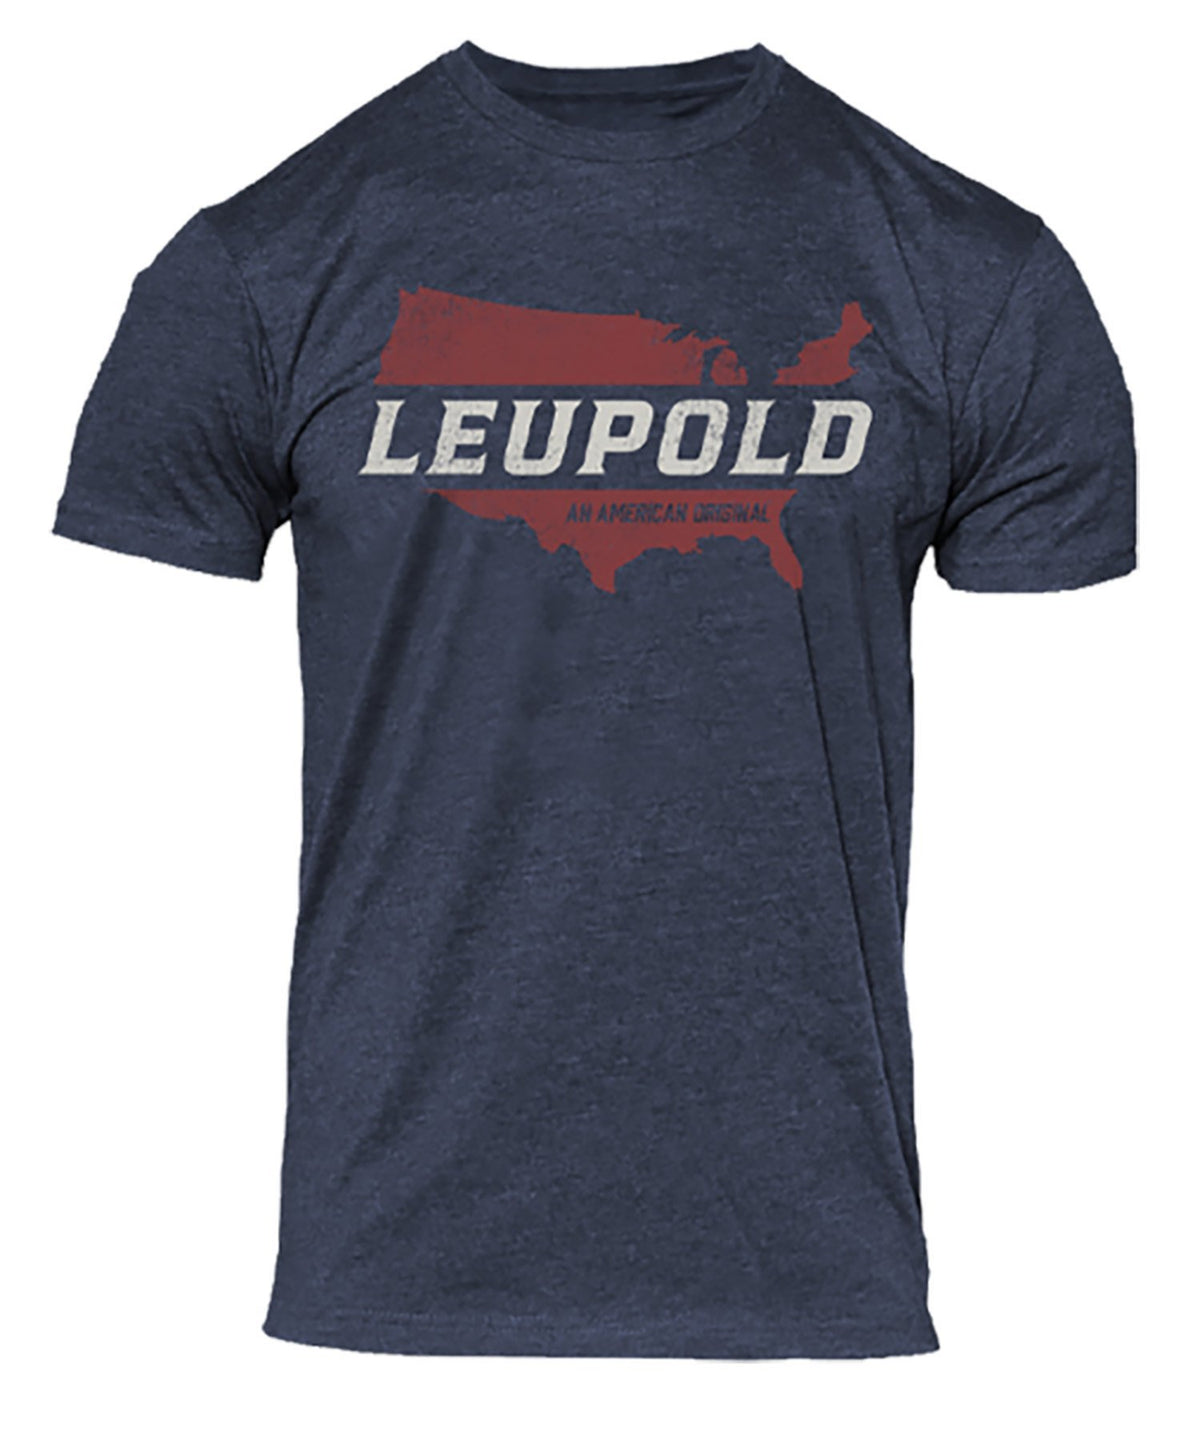 Leupold American Original T-Shirt Navy Heather XL Short Sleeve - Pacific Flyway Supplies